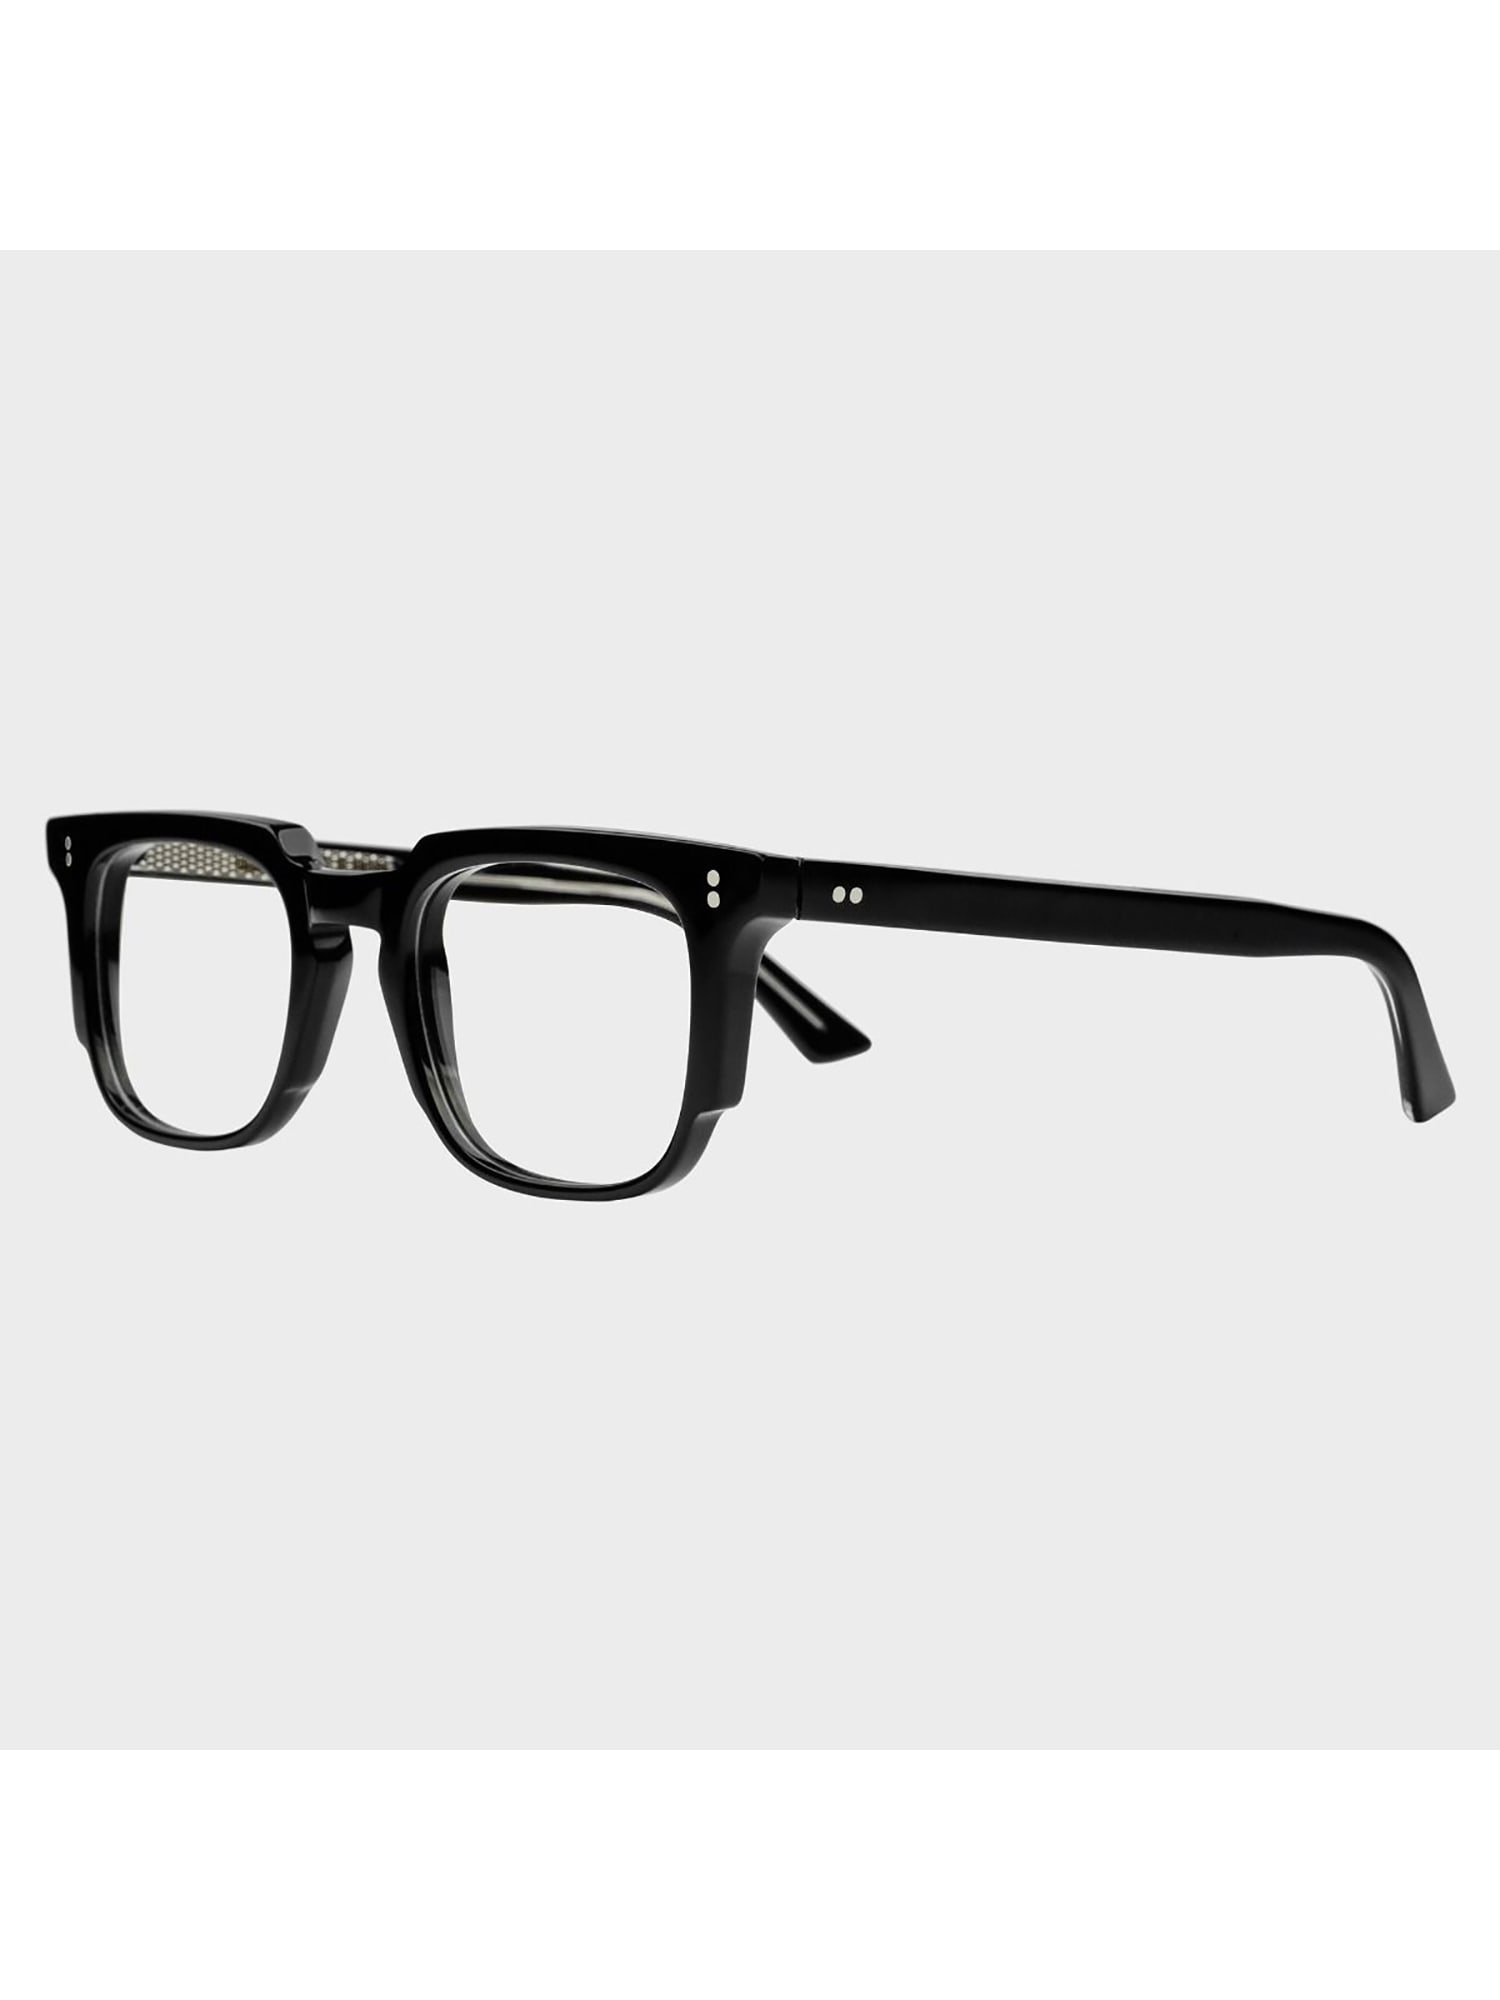 Cutler And Gross 1382 Eyewear In Black